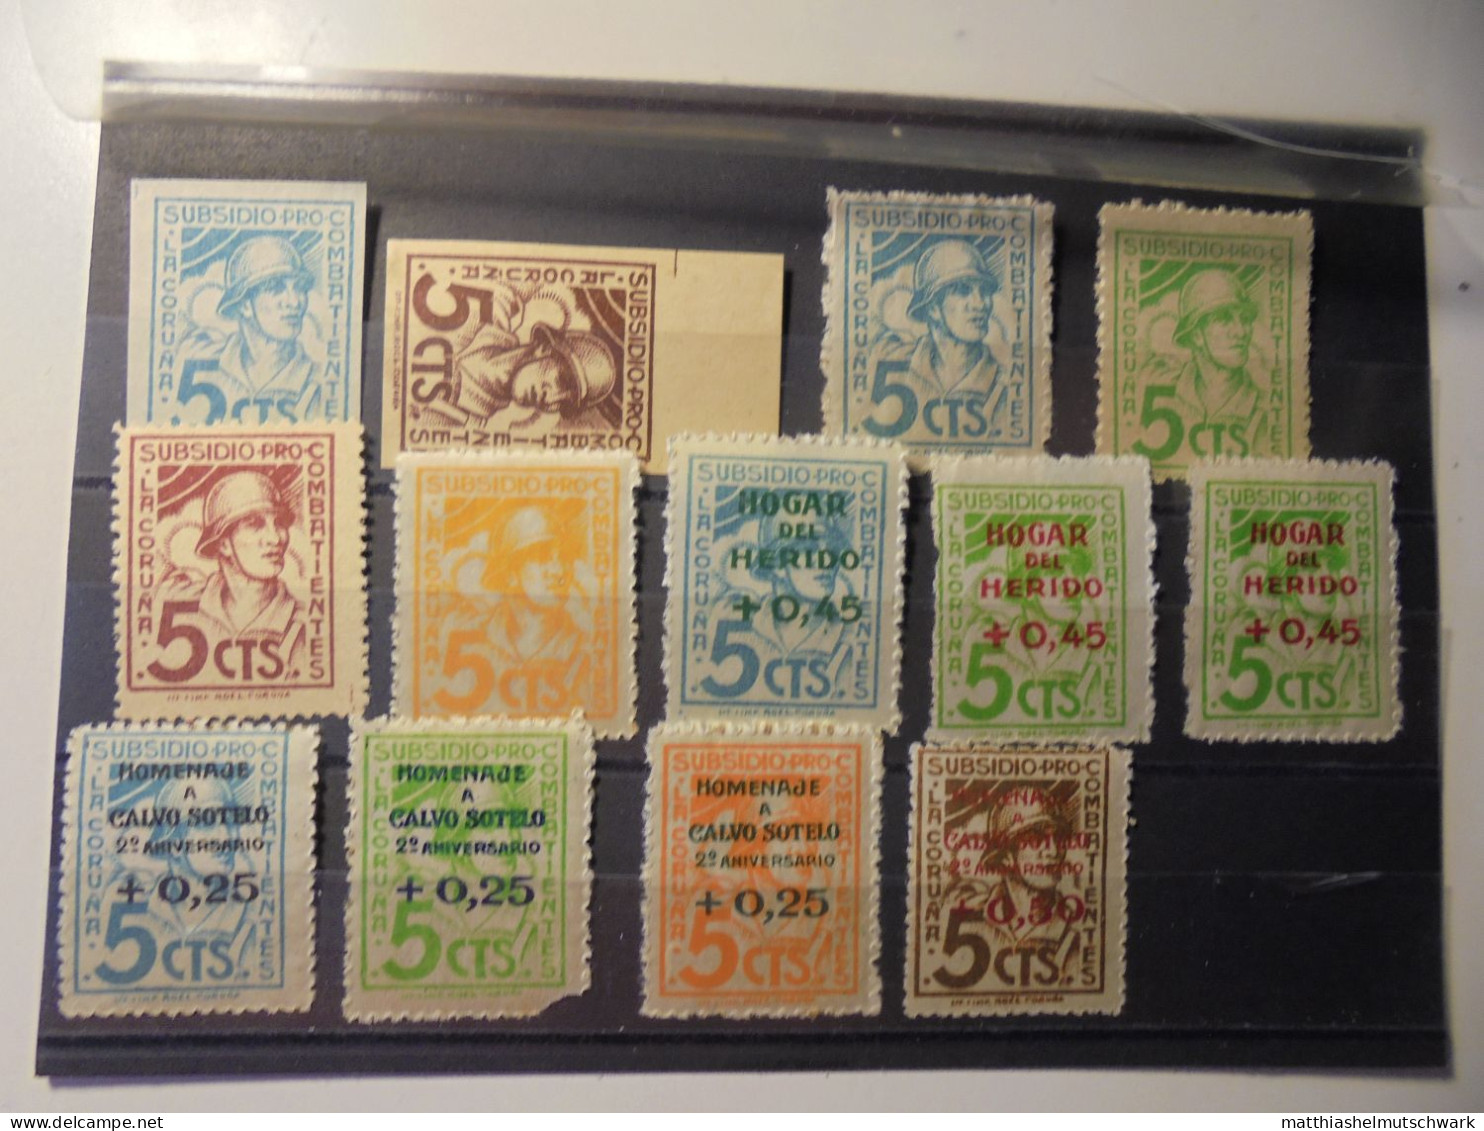 Spanien/Spanischer Bürgerkrieg/Lokalausgaben/1936-1939 Einzelmarken, Sätze, Viererblöcke, u.a.